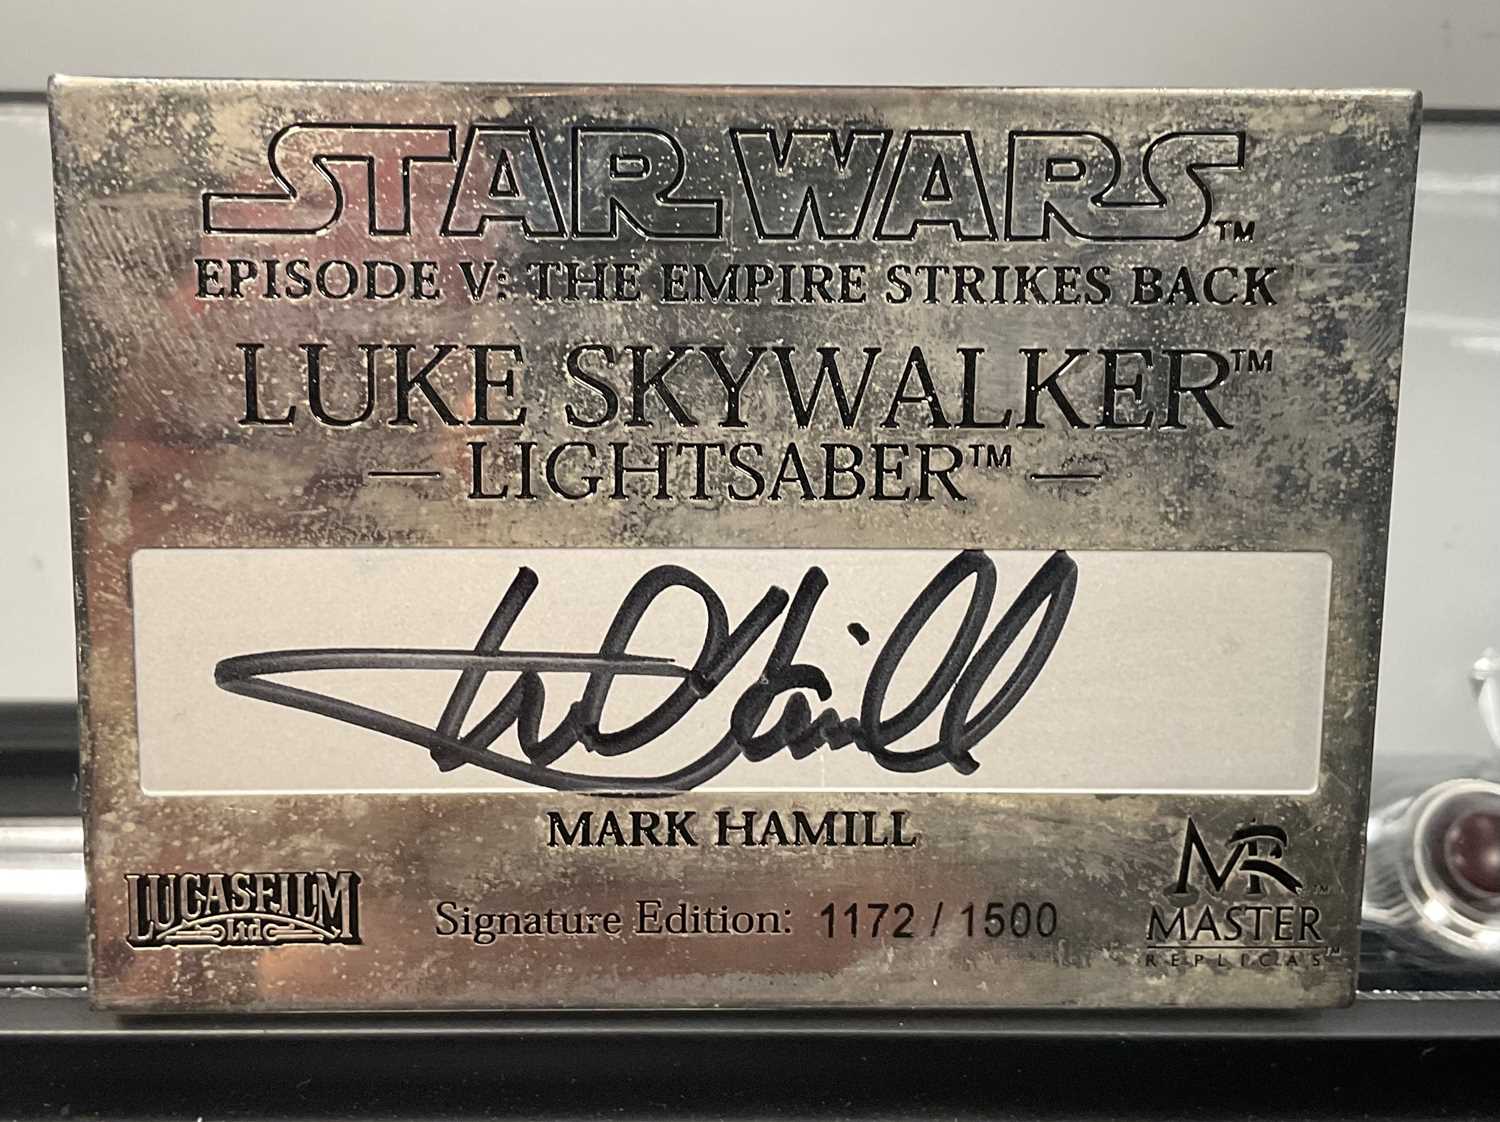 STAR WARS - A Master Replicas Luke Skywalker Star Wars Episode V Empire Strikes Back Signature - Image 6 of 9